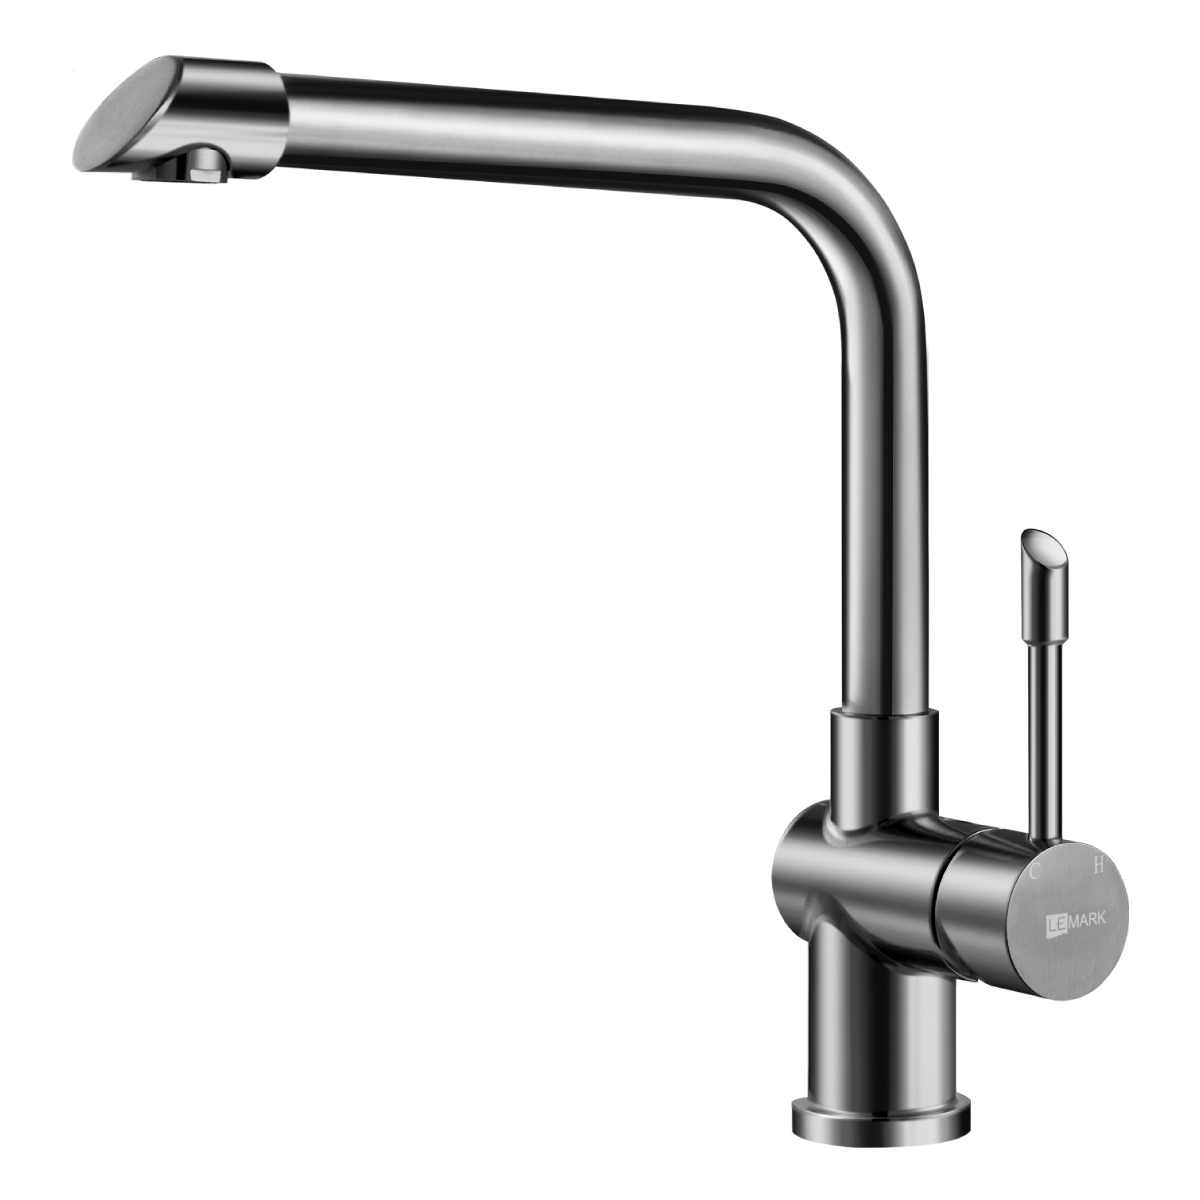 LM5074S Kitchen faucet
with swivel spout